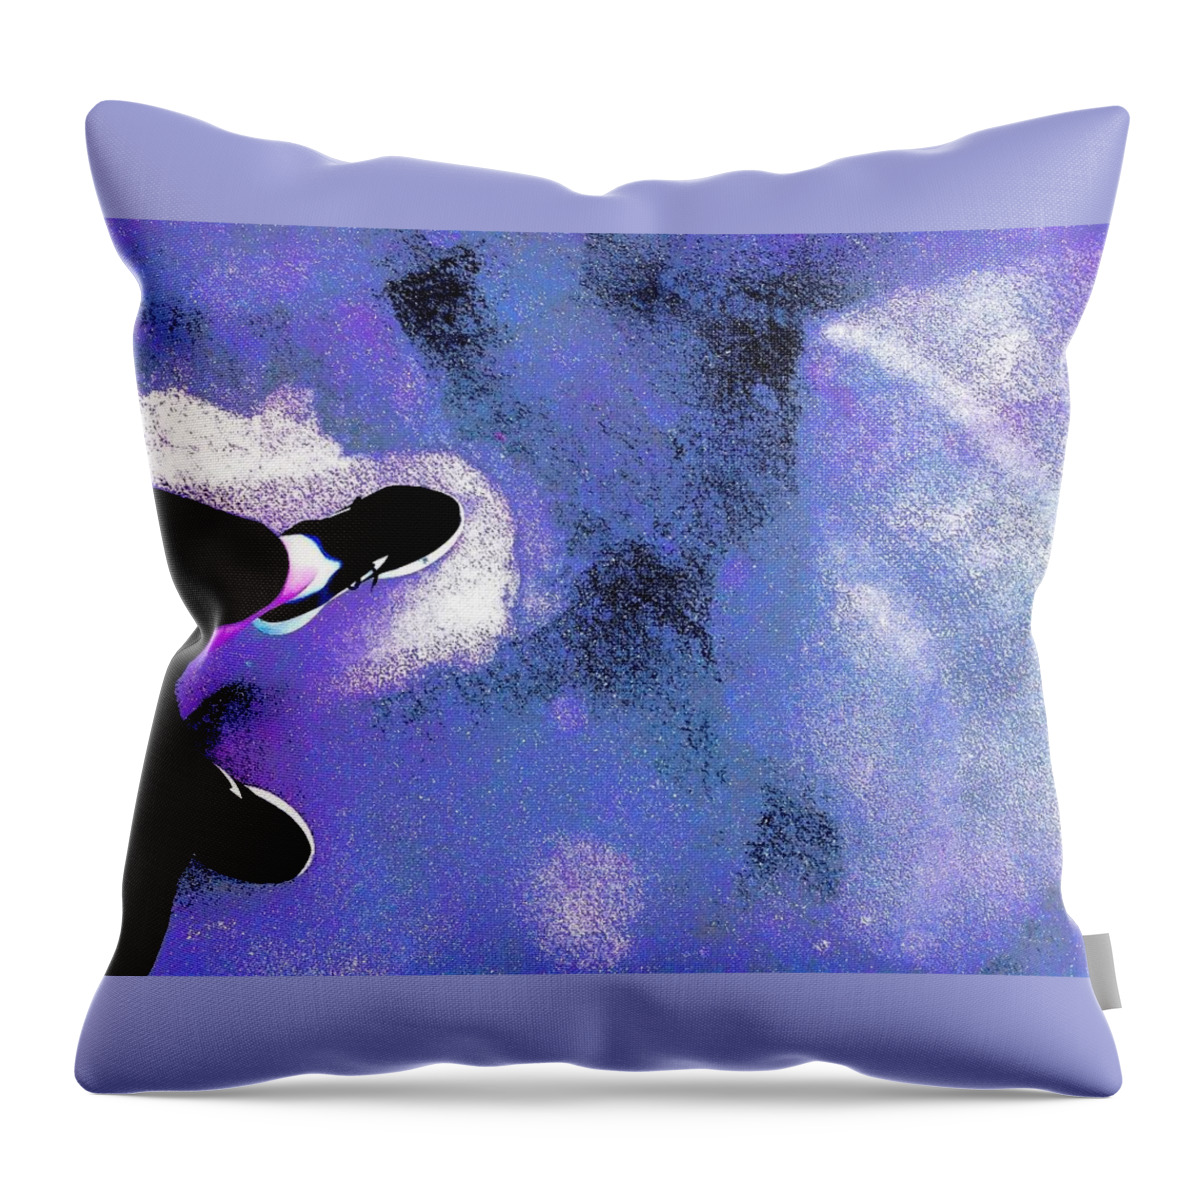  Throw Pillow featuring the photograph Purple Haze by Michelle Hoffmann